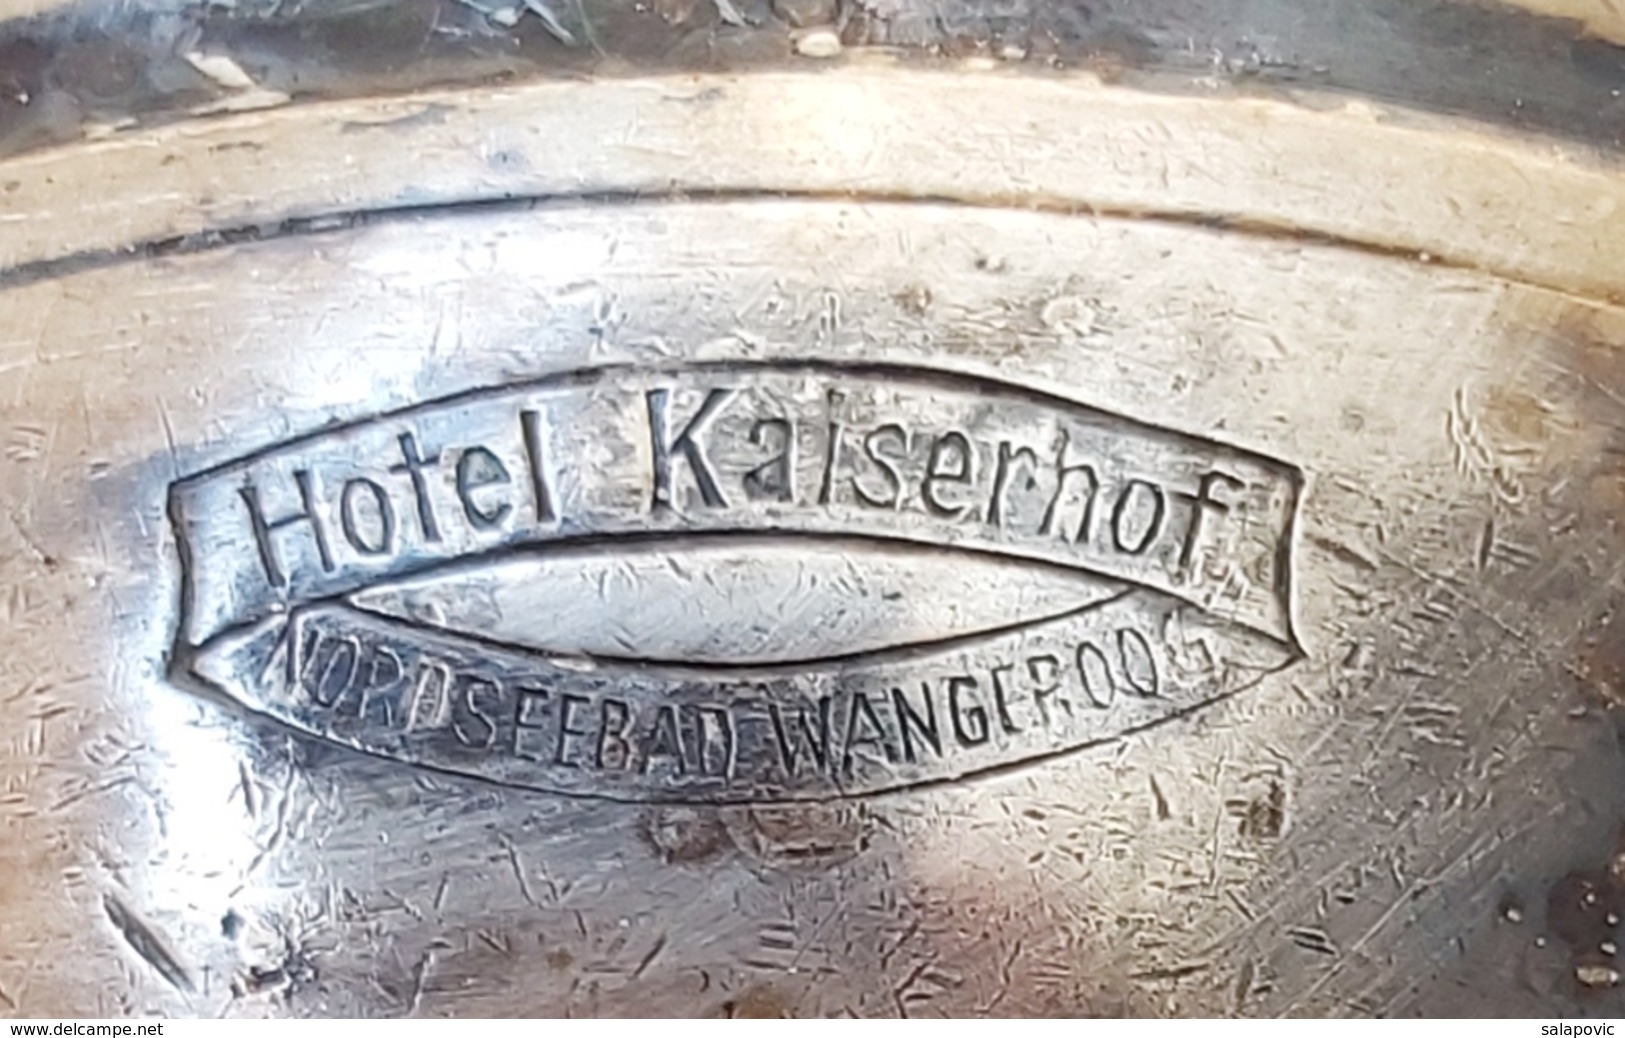 Old Cup Wine Glass Hotel Kaiserhof, Nord Seebad Wangeroog - Tazze